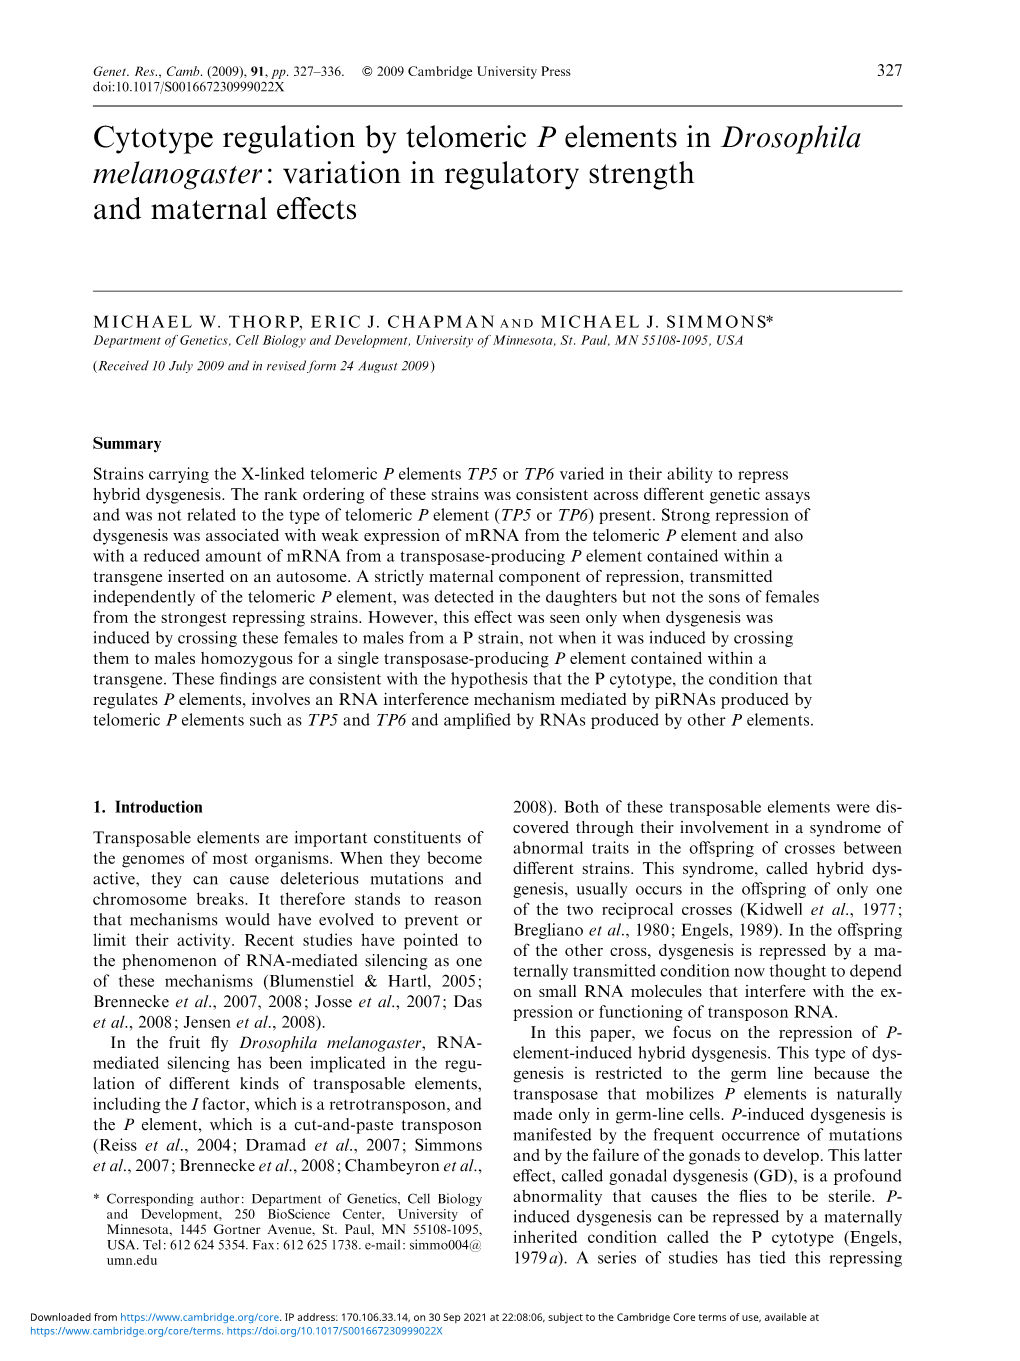 Cytotype Regulation by Telomeric P Elements in Drosophila Melanogaster: Variation in Regulatory Strength and Maternal Eﬀects